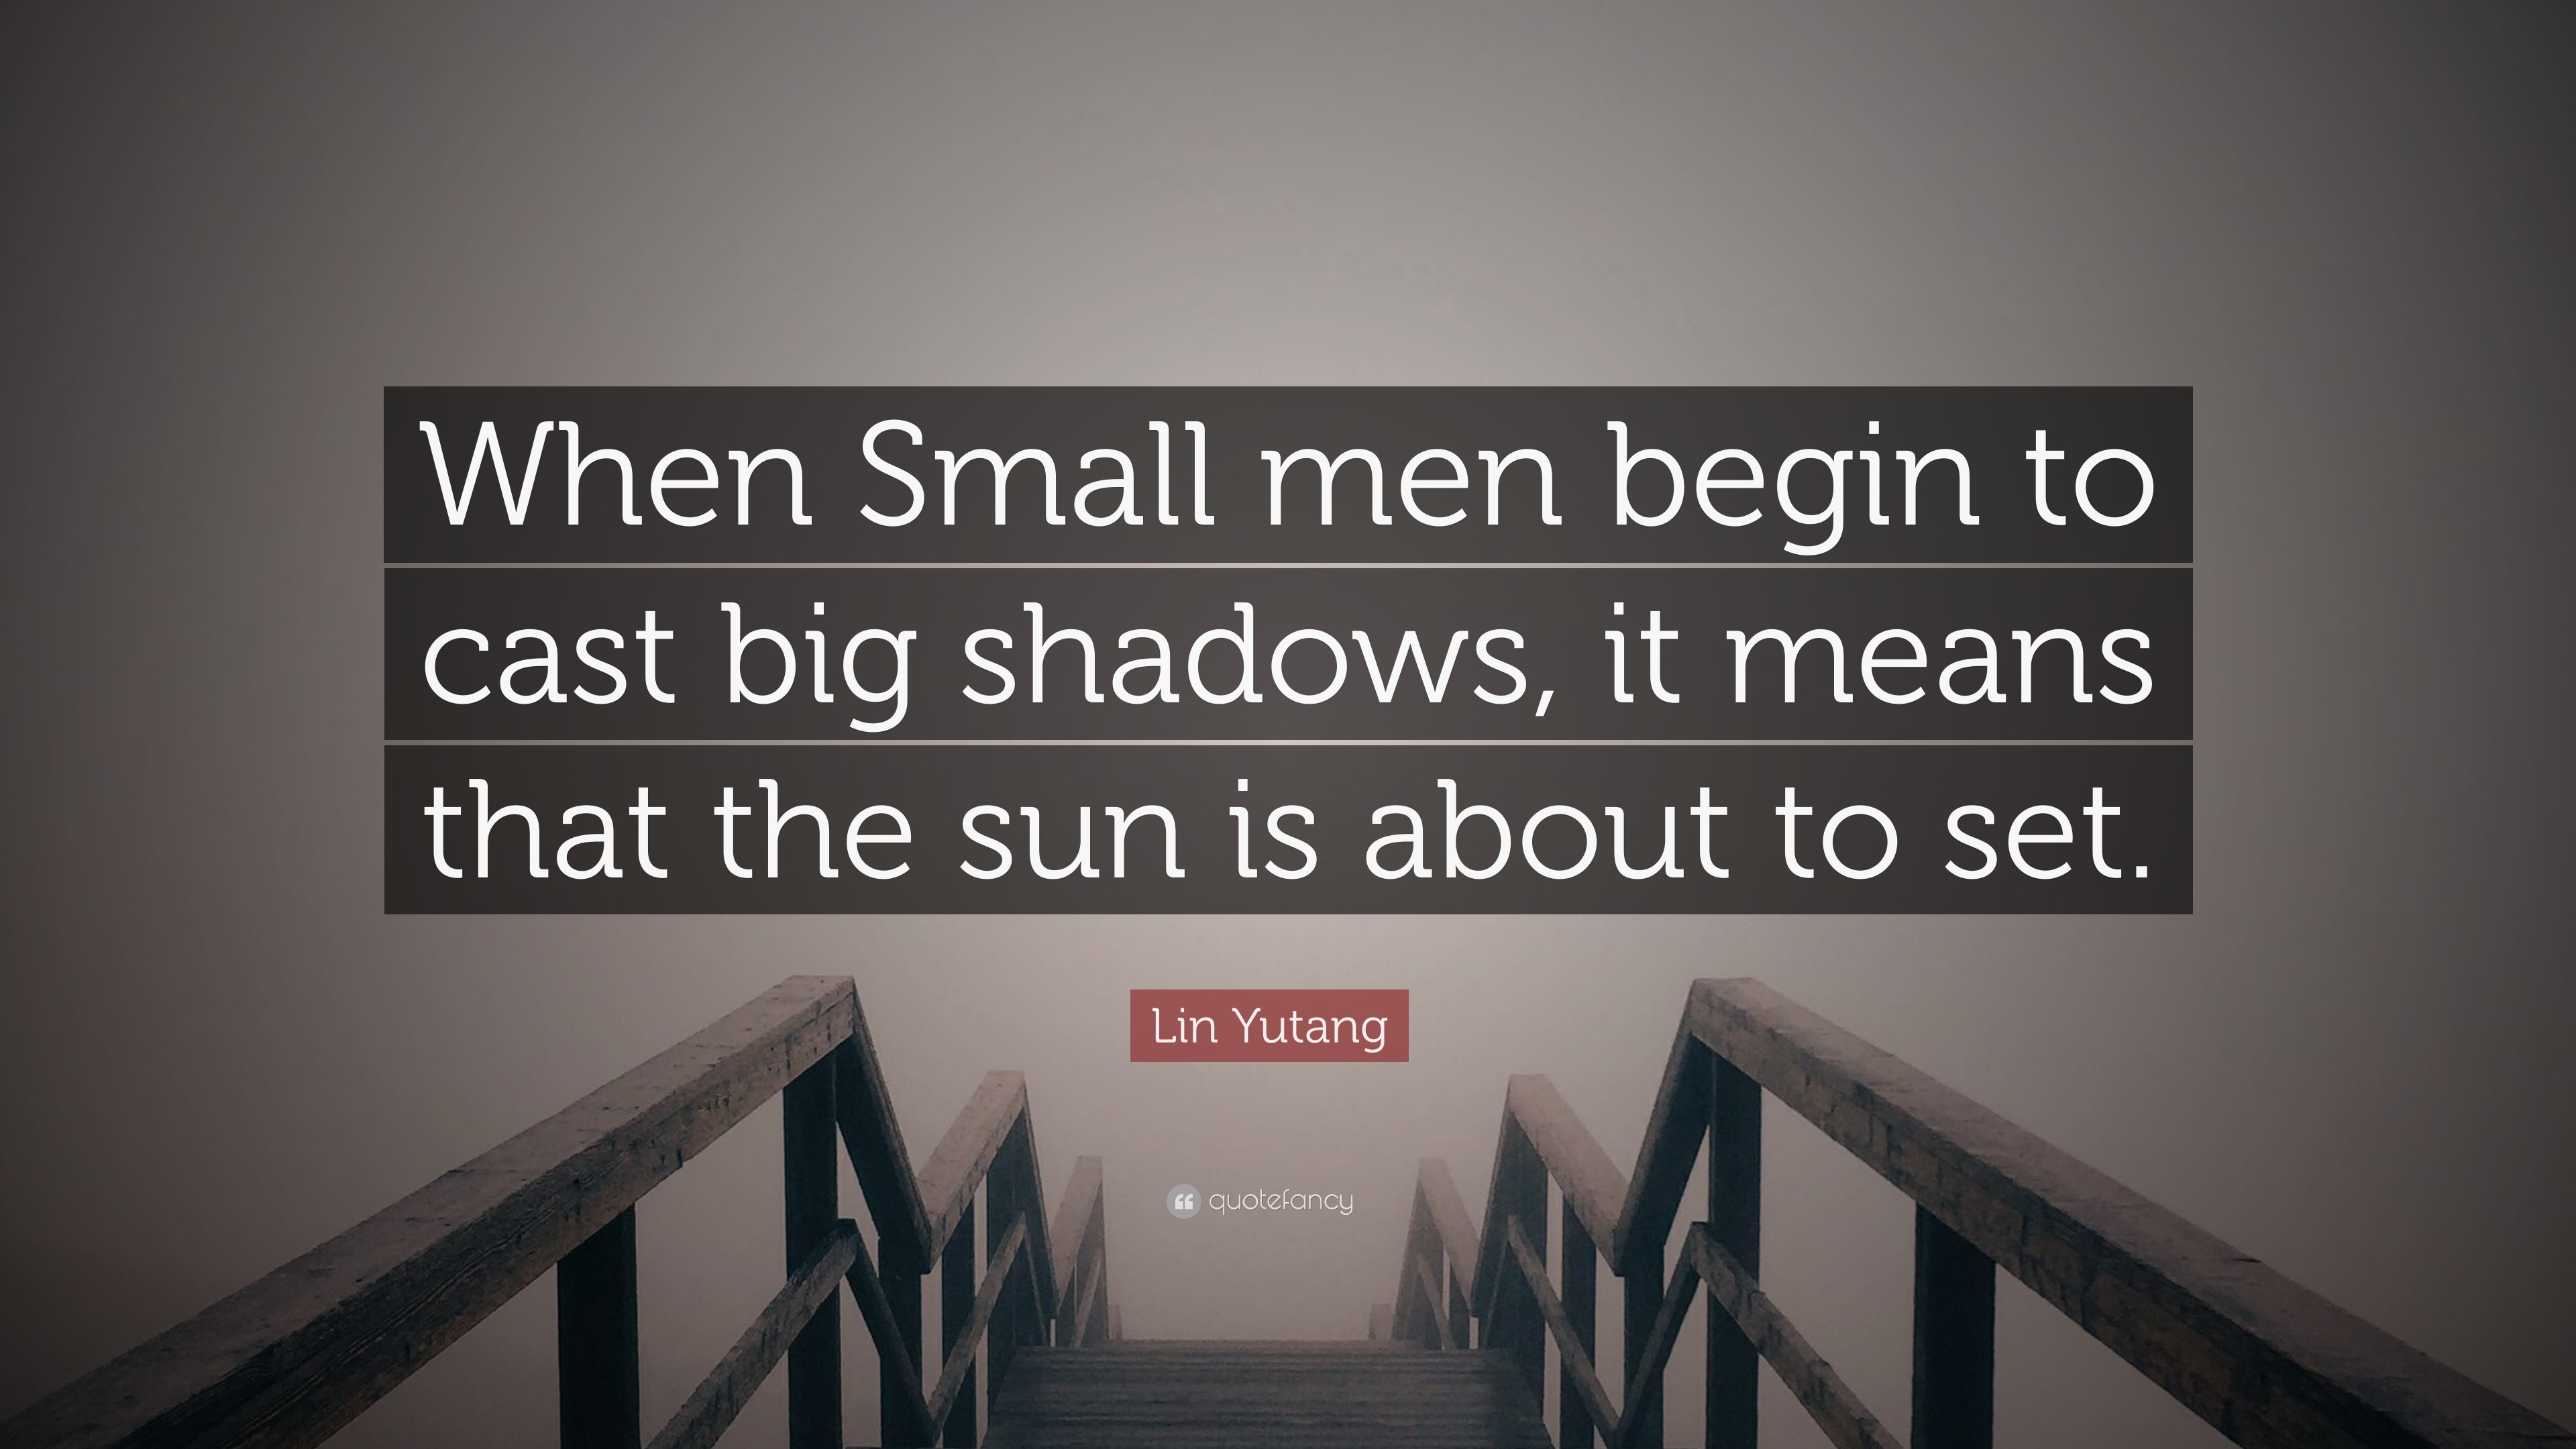 Lin Yutang Quote: “When Small men begin to cast big shadows, it ...